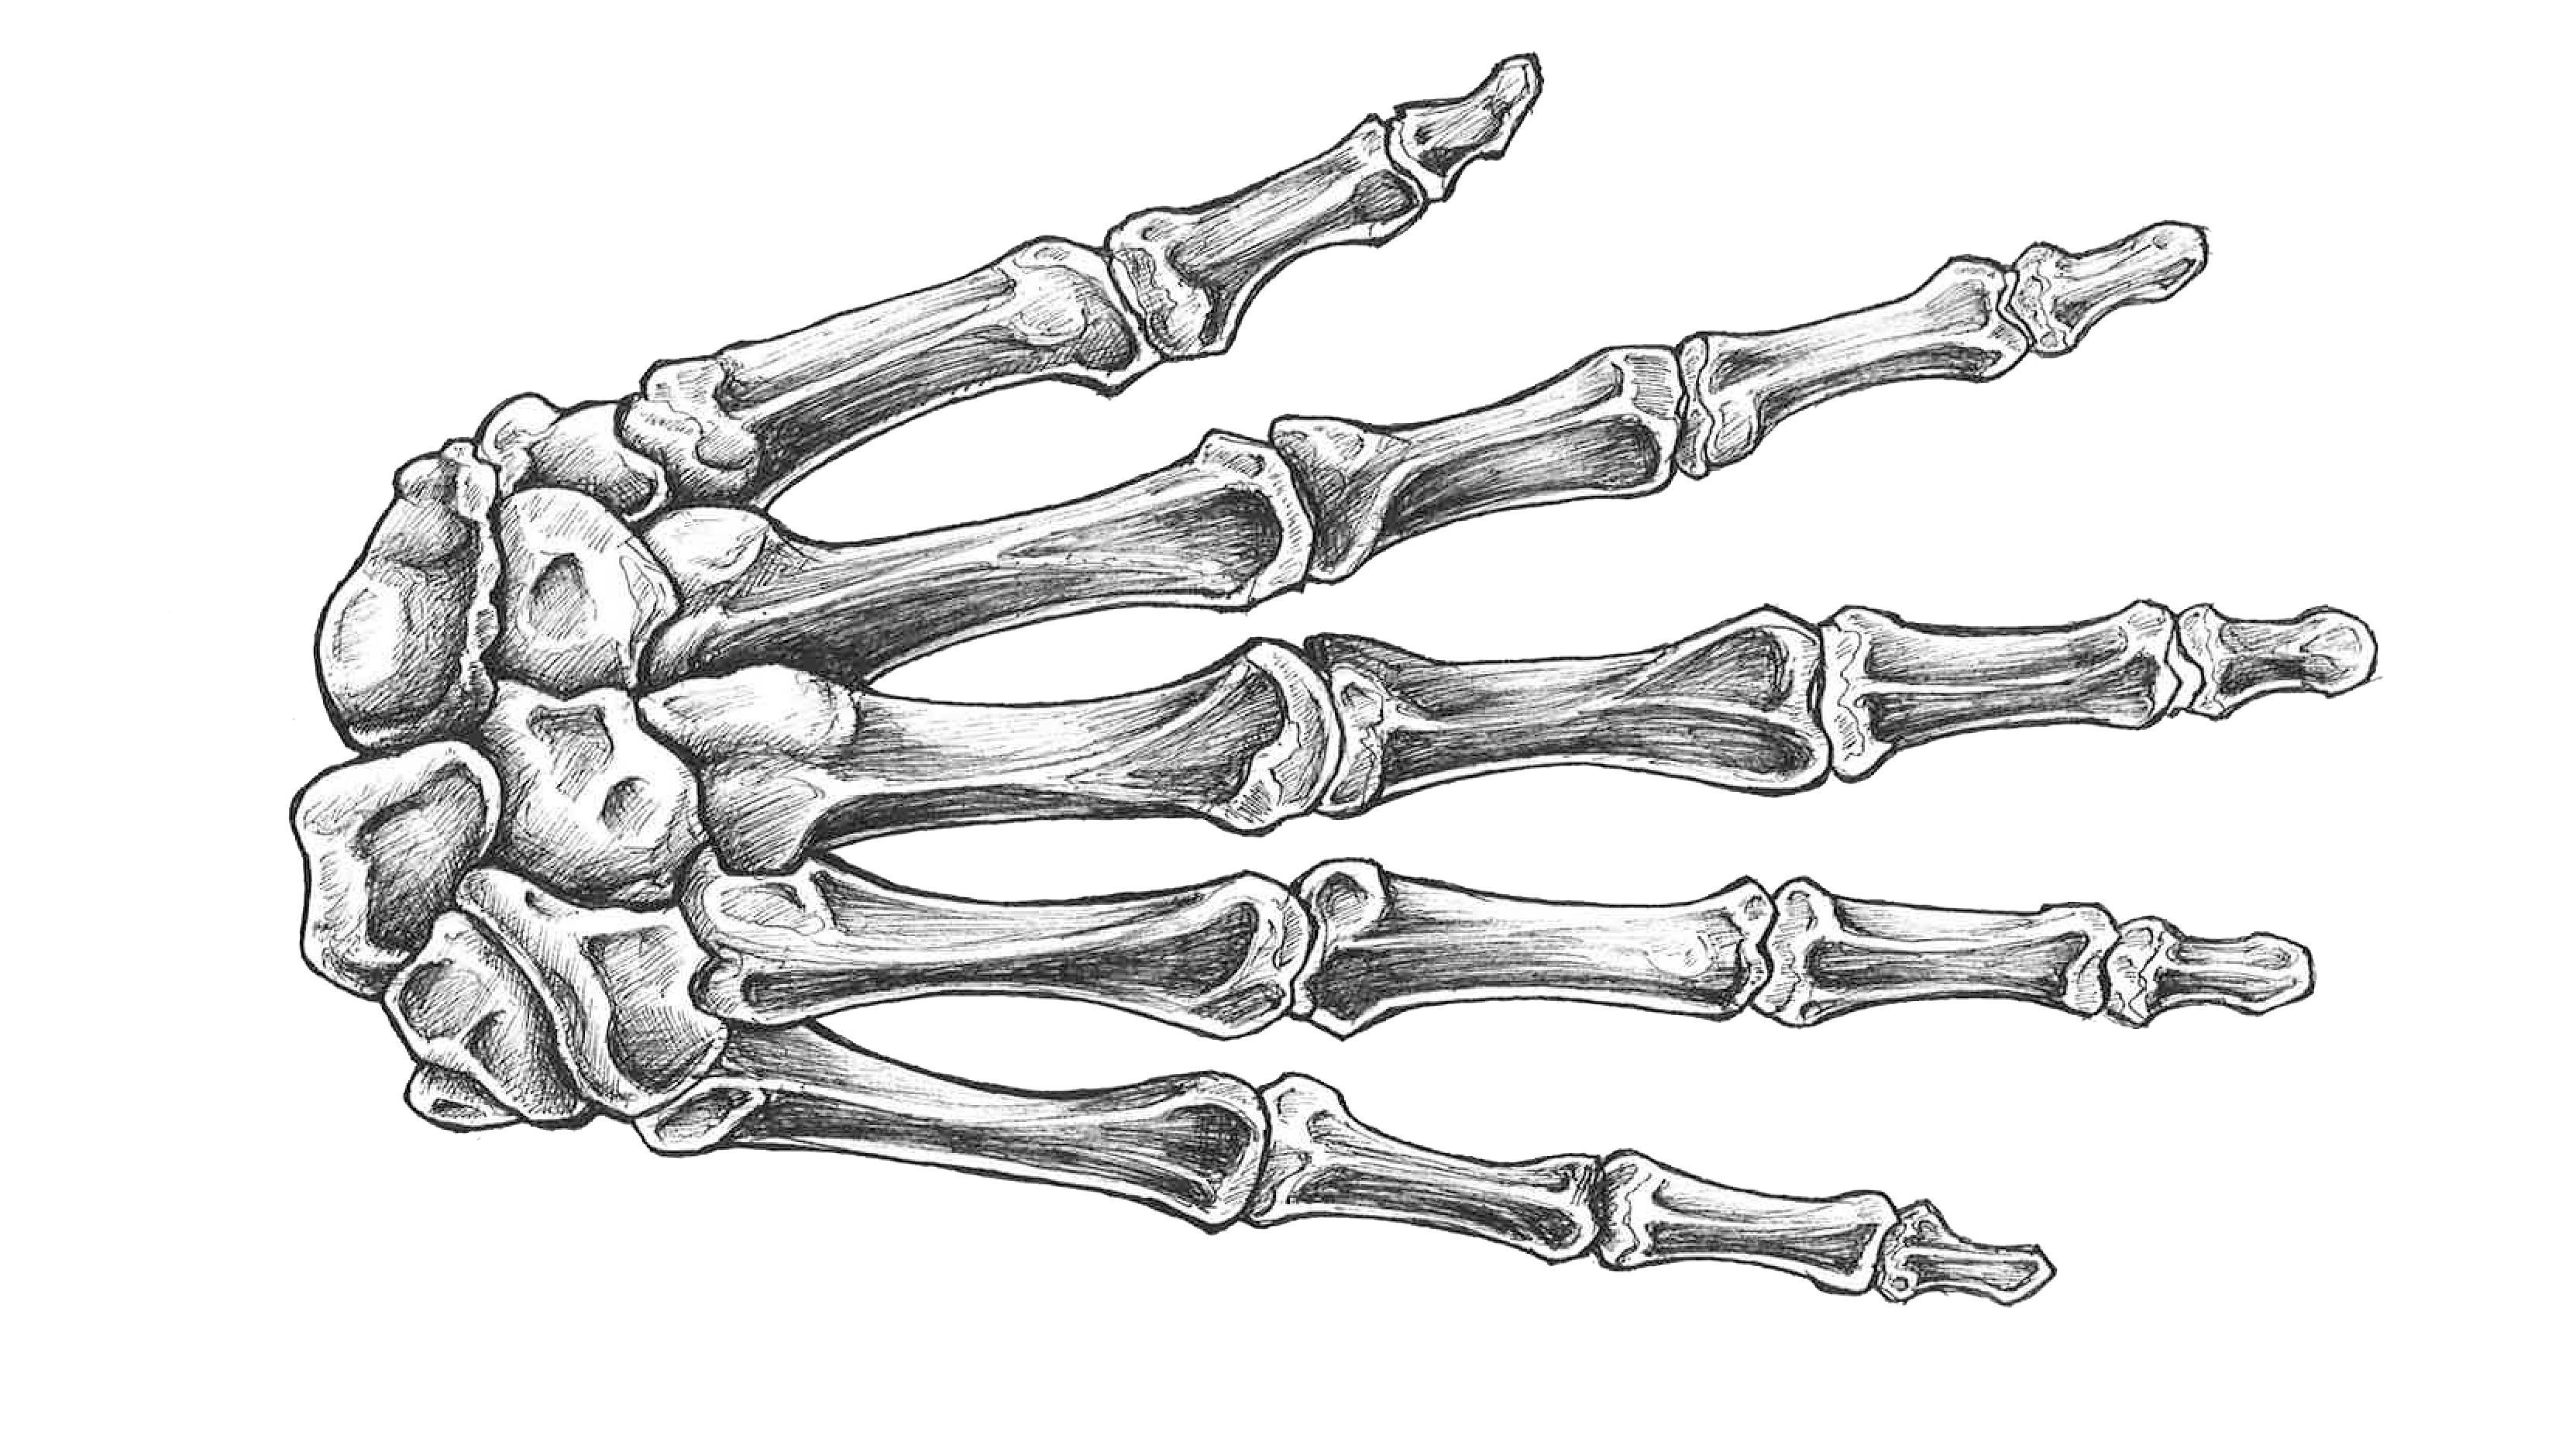 Ковид кости. Кости кисти анатомия. Кисть скелета сбоку. Анатомия костей кисти руки. Скелет руки человека.